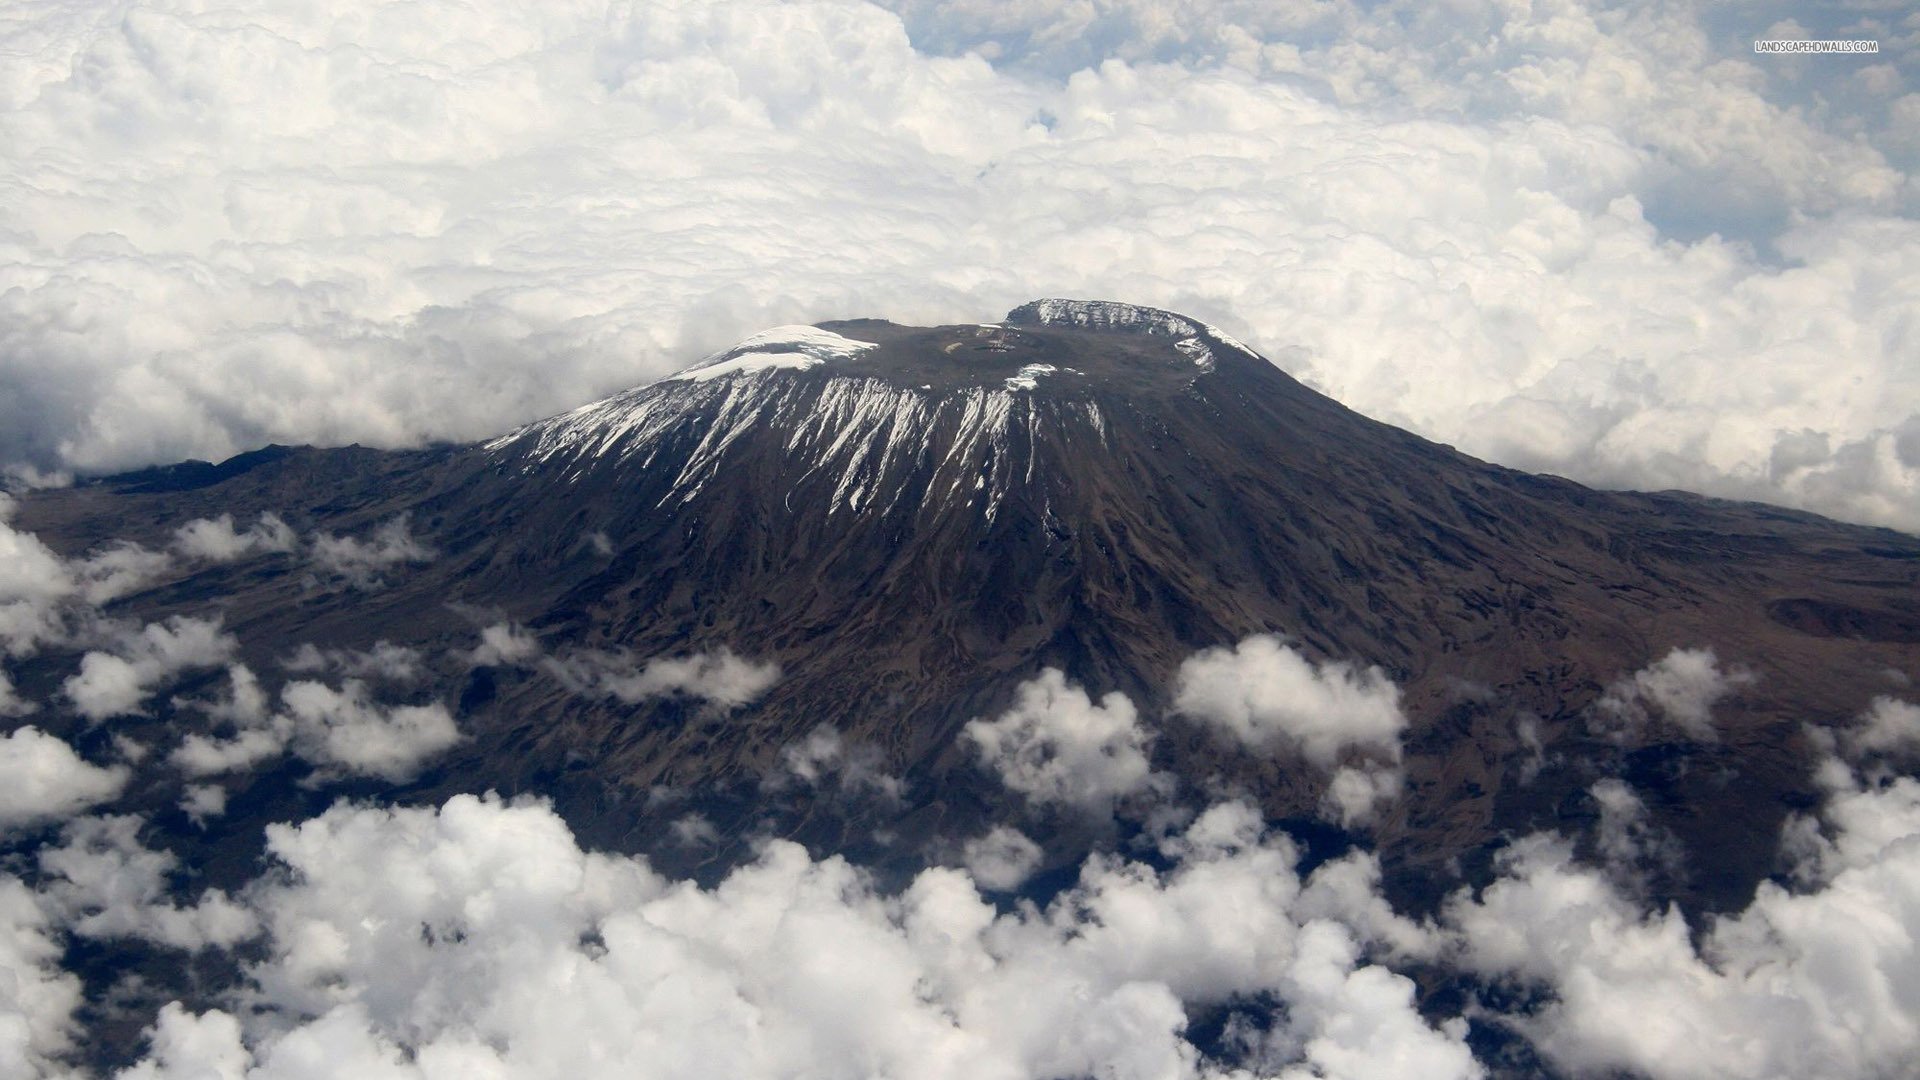 About Mount Kilimanjaro